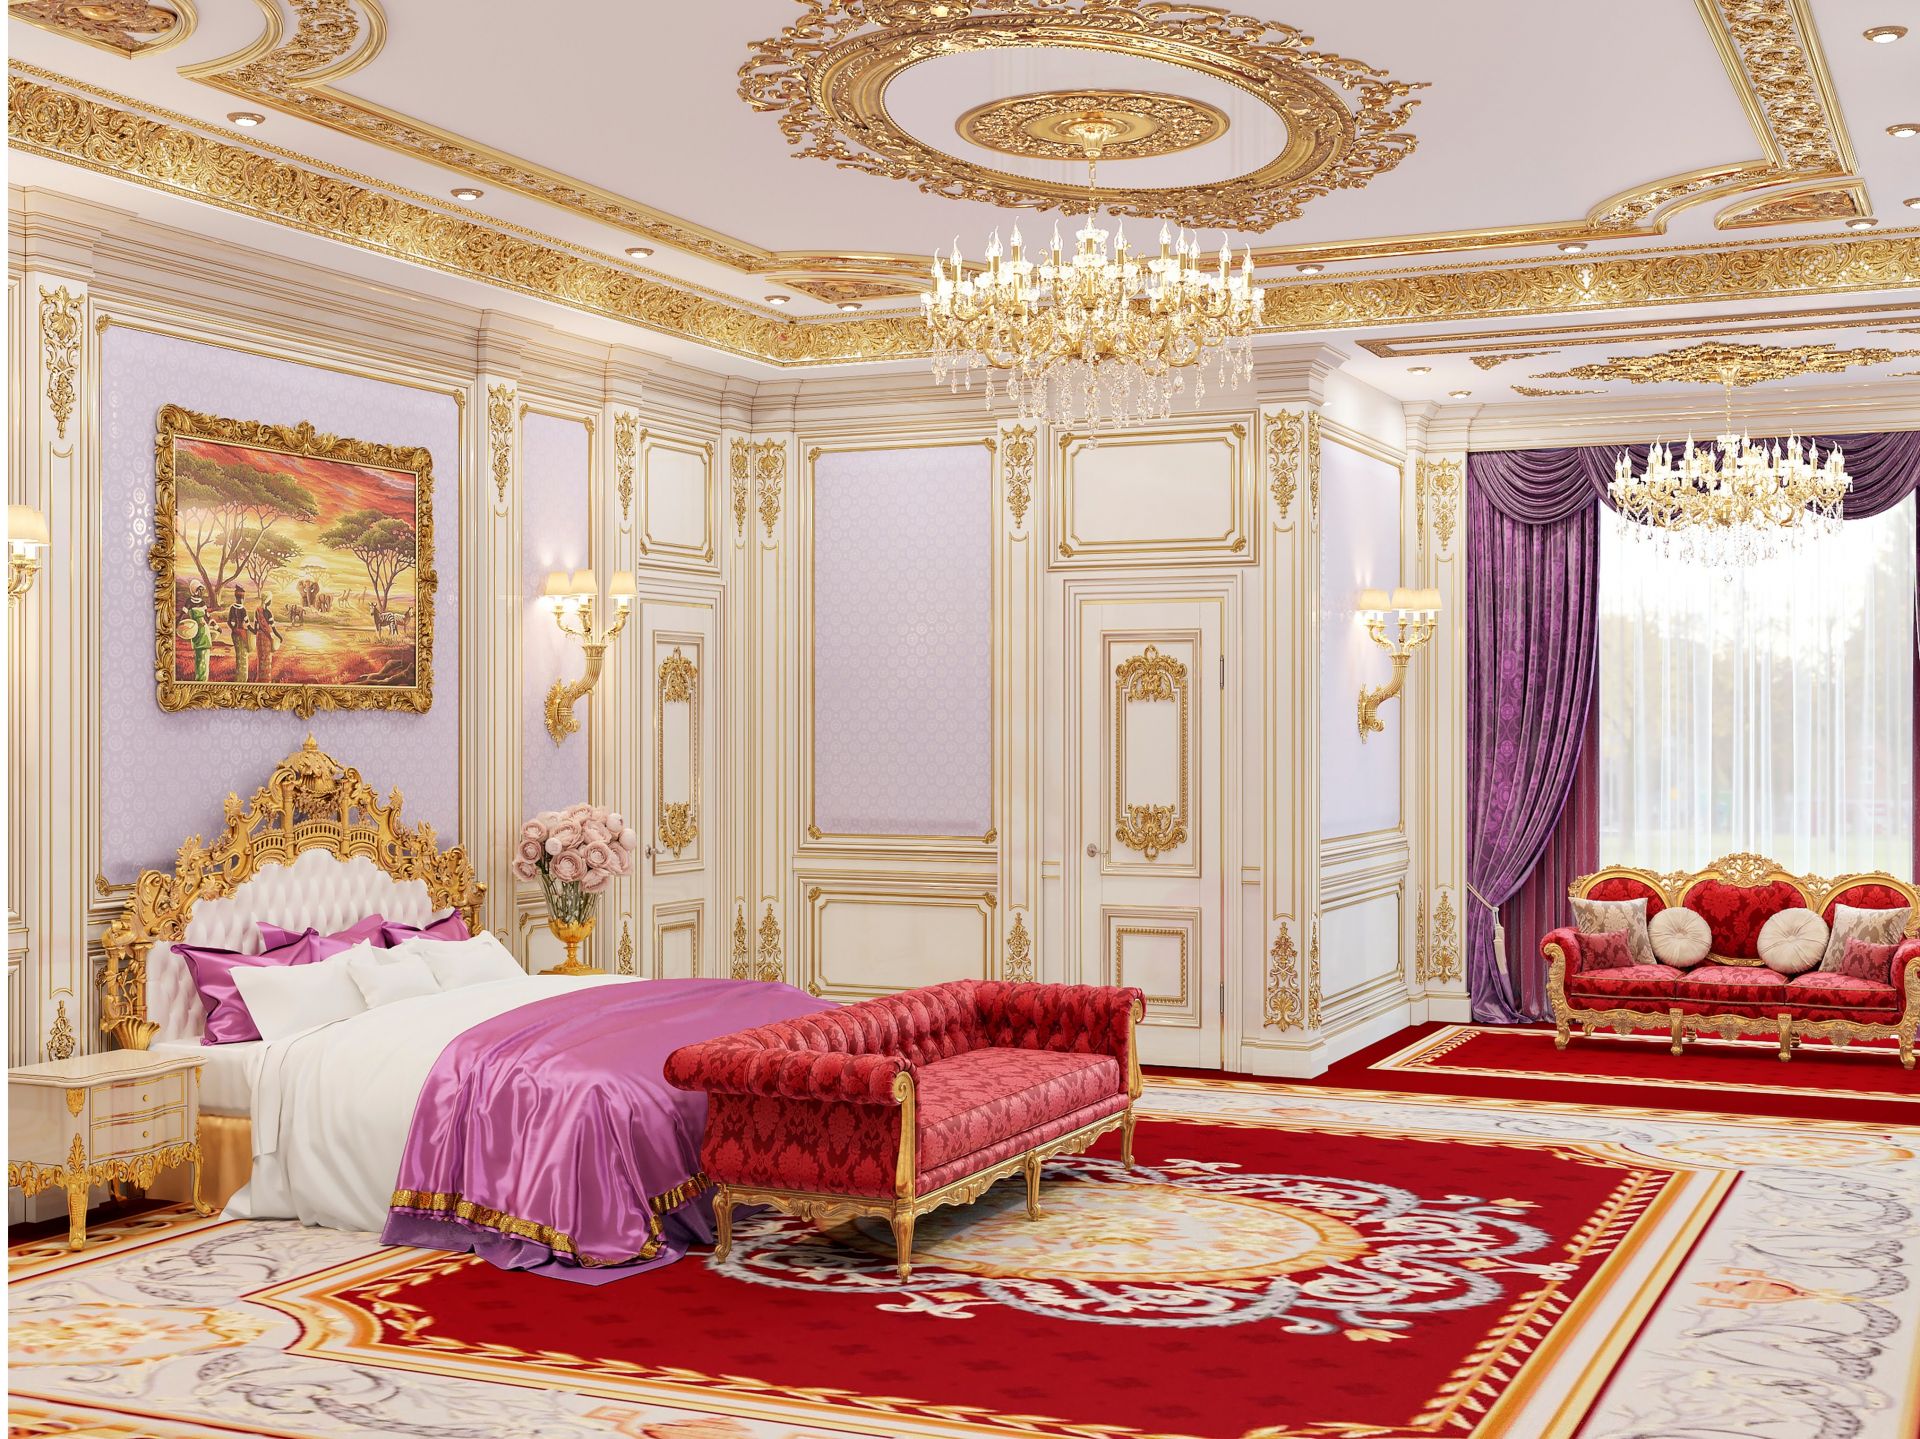 Luxury bedroom interior design